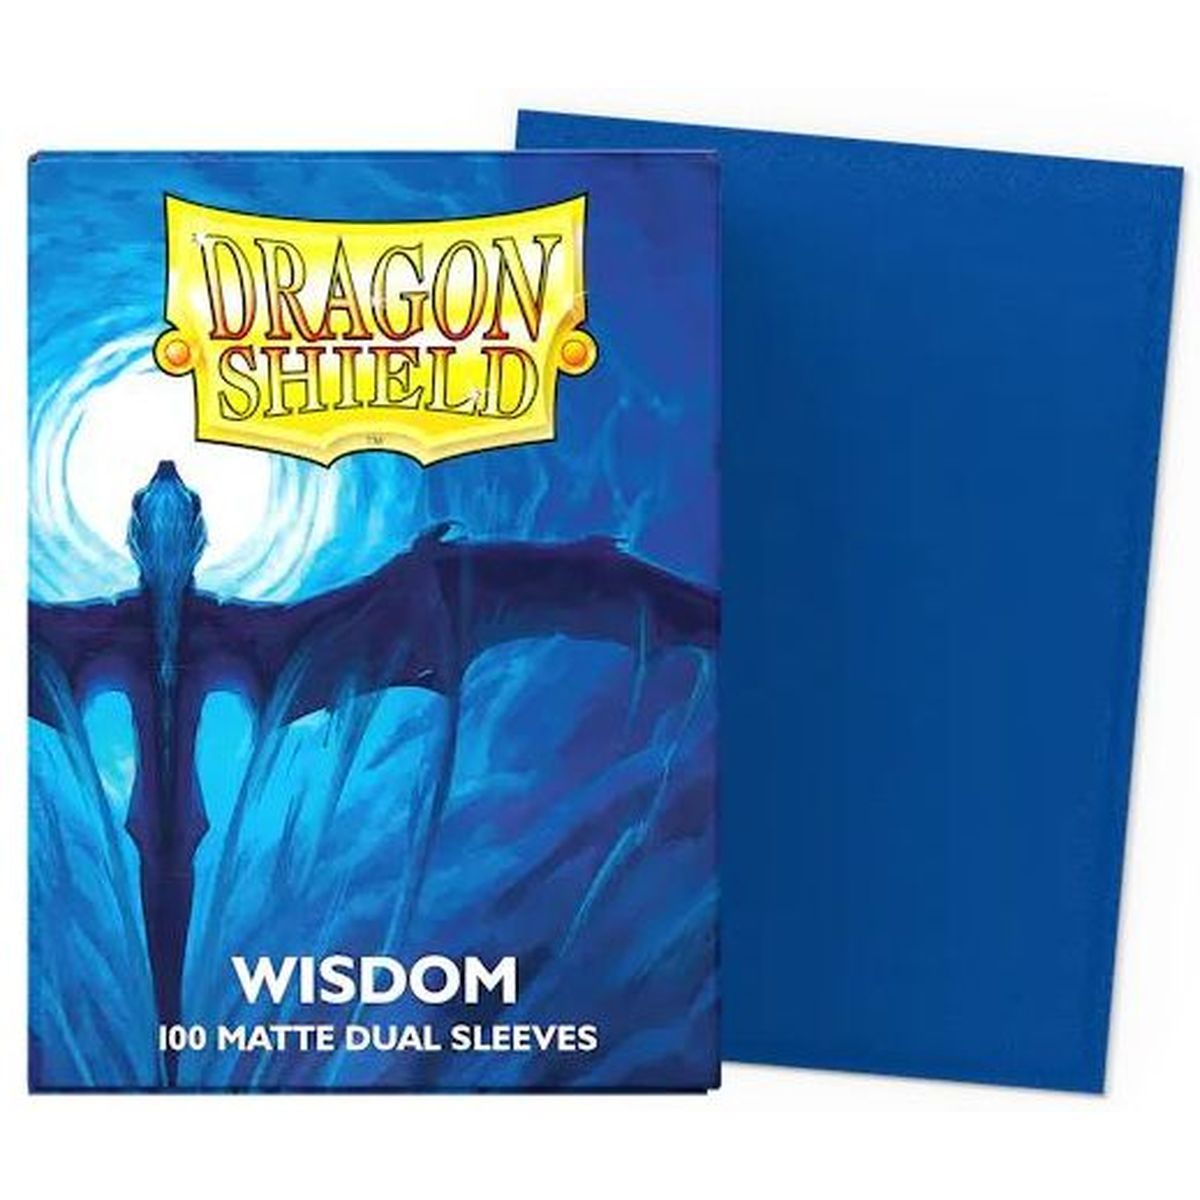 Item Dragon Shield - Standard Sleeves - Dual Matte Wisdom (100)